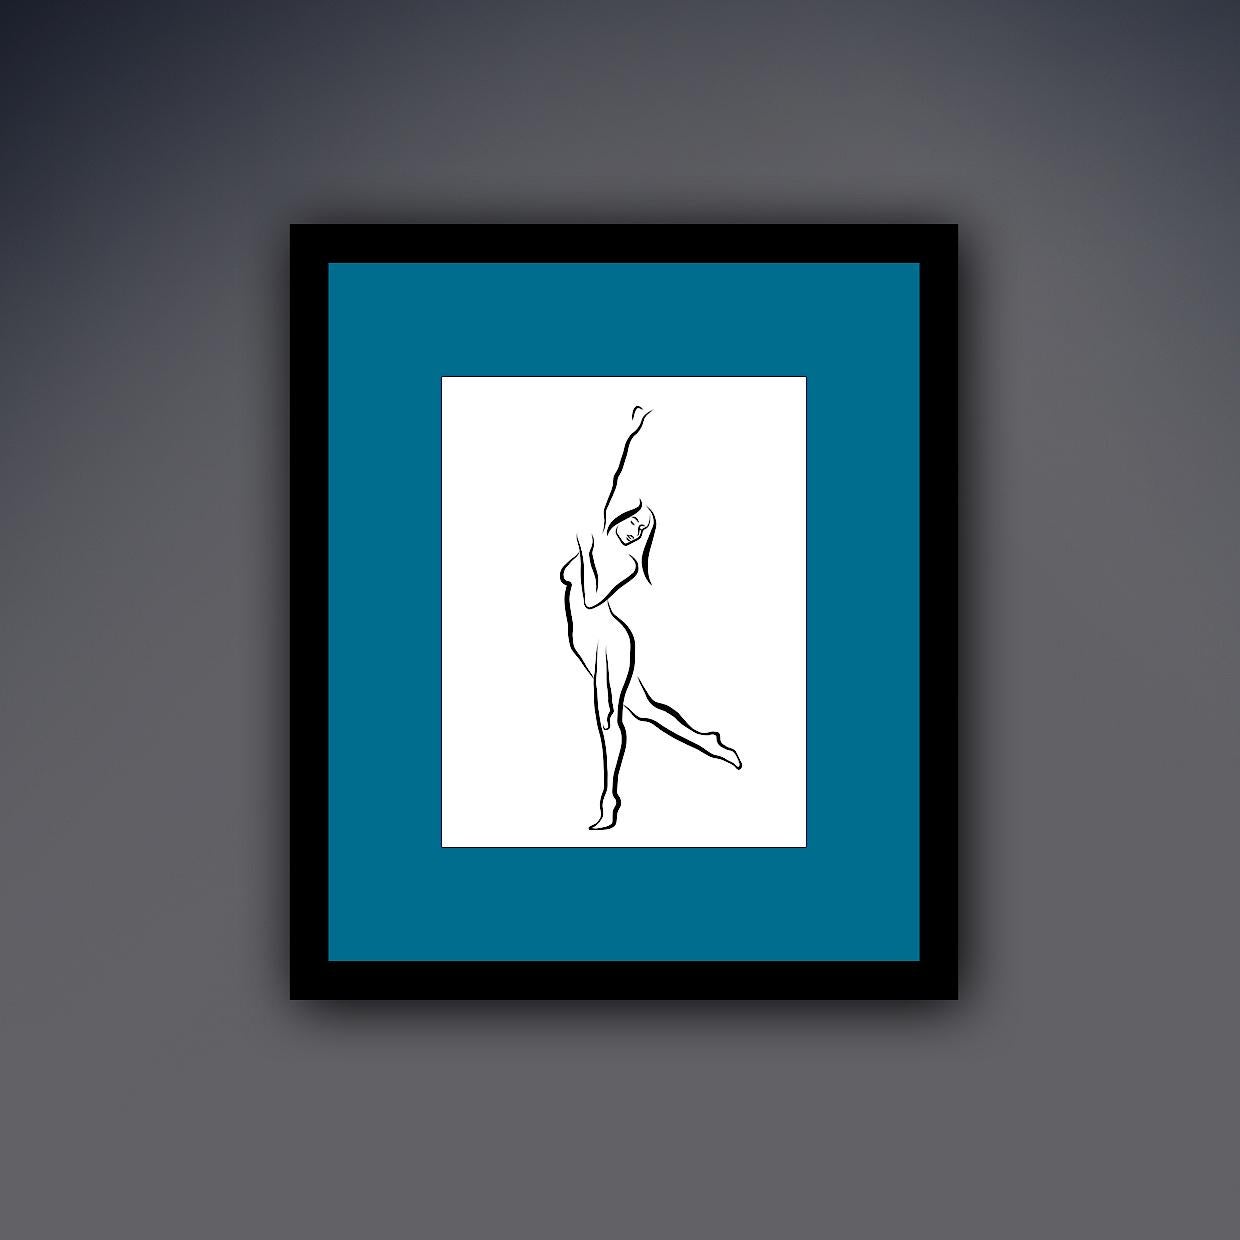 Haiku #24, 1/50 - Digital Vector Drawing Dancing Female Nude Woman Figure Arm Up - Contemporary Print by Michael Binkley